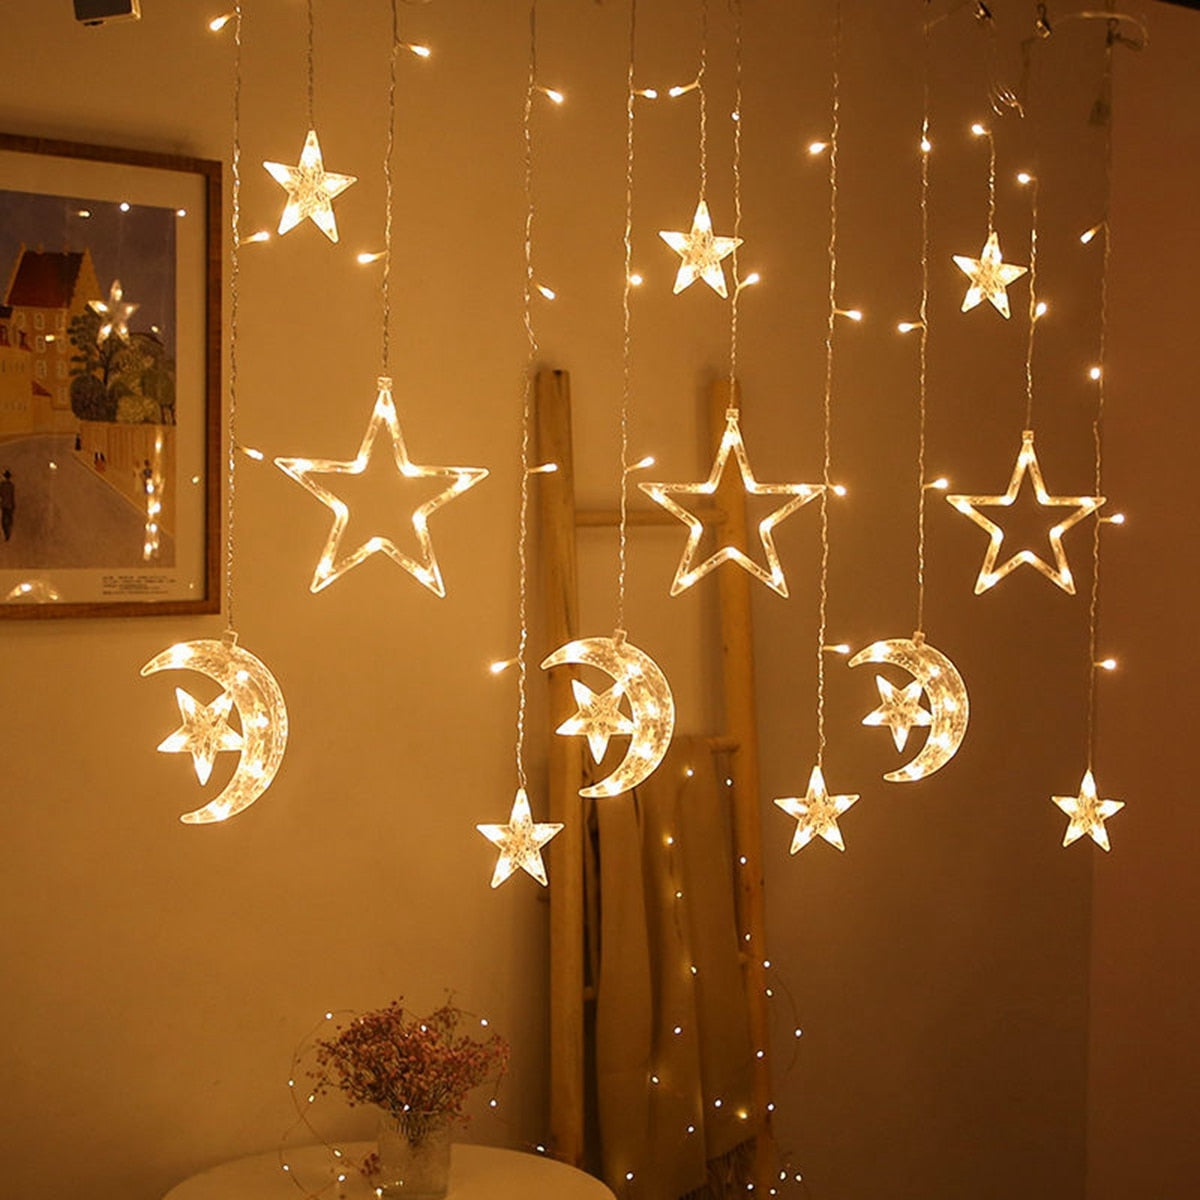 Star/Crescent Lights for Ramadan/Eid